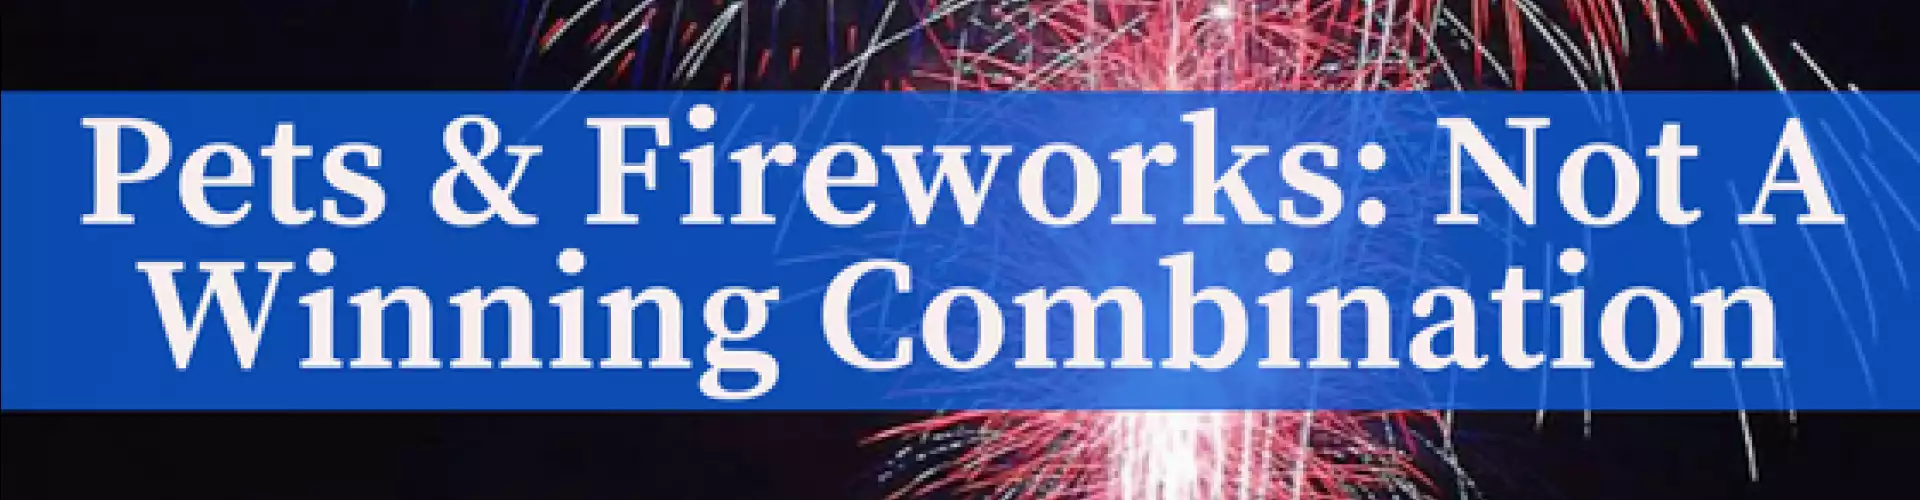 Pets & Fireworks: Not A Winning Combination